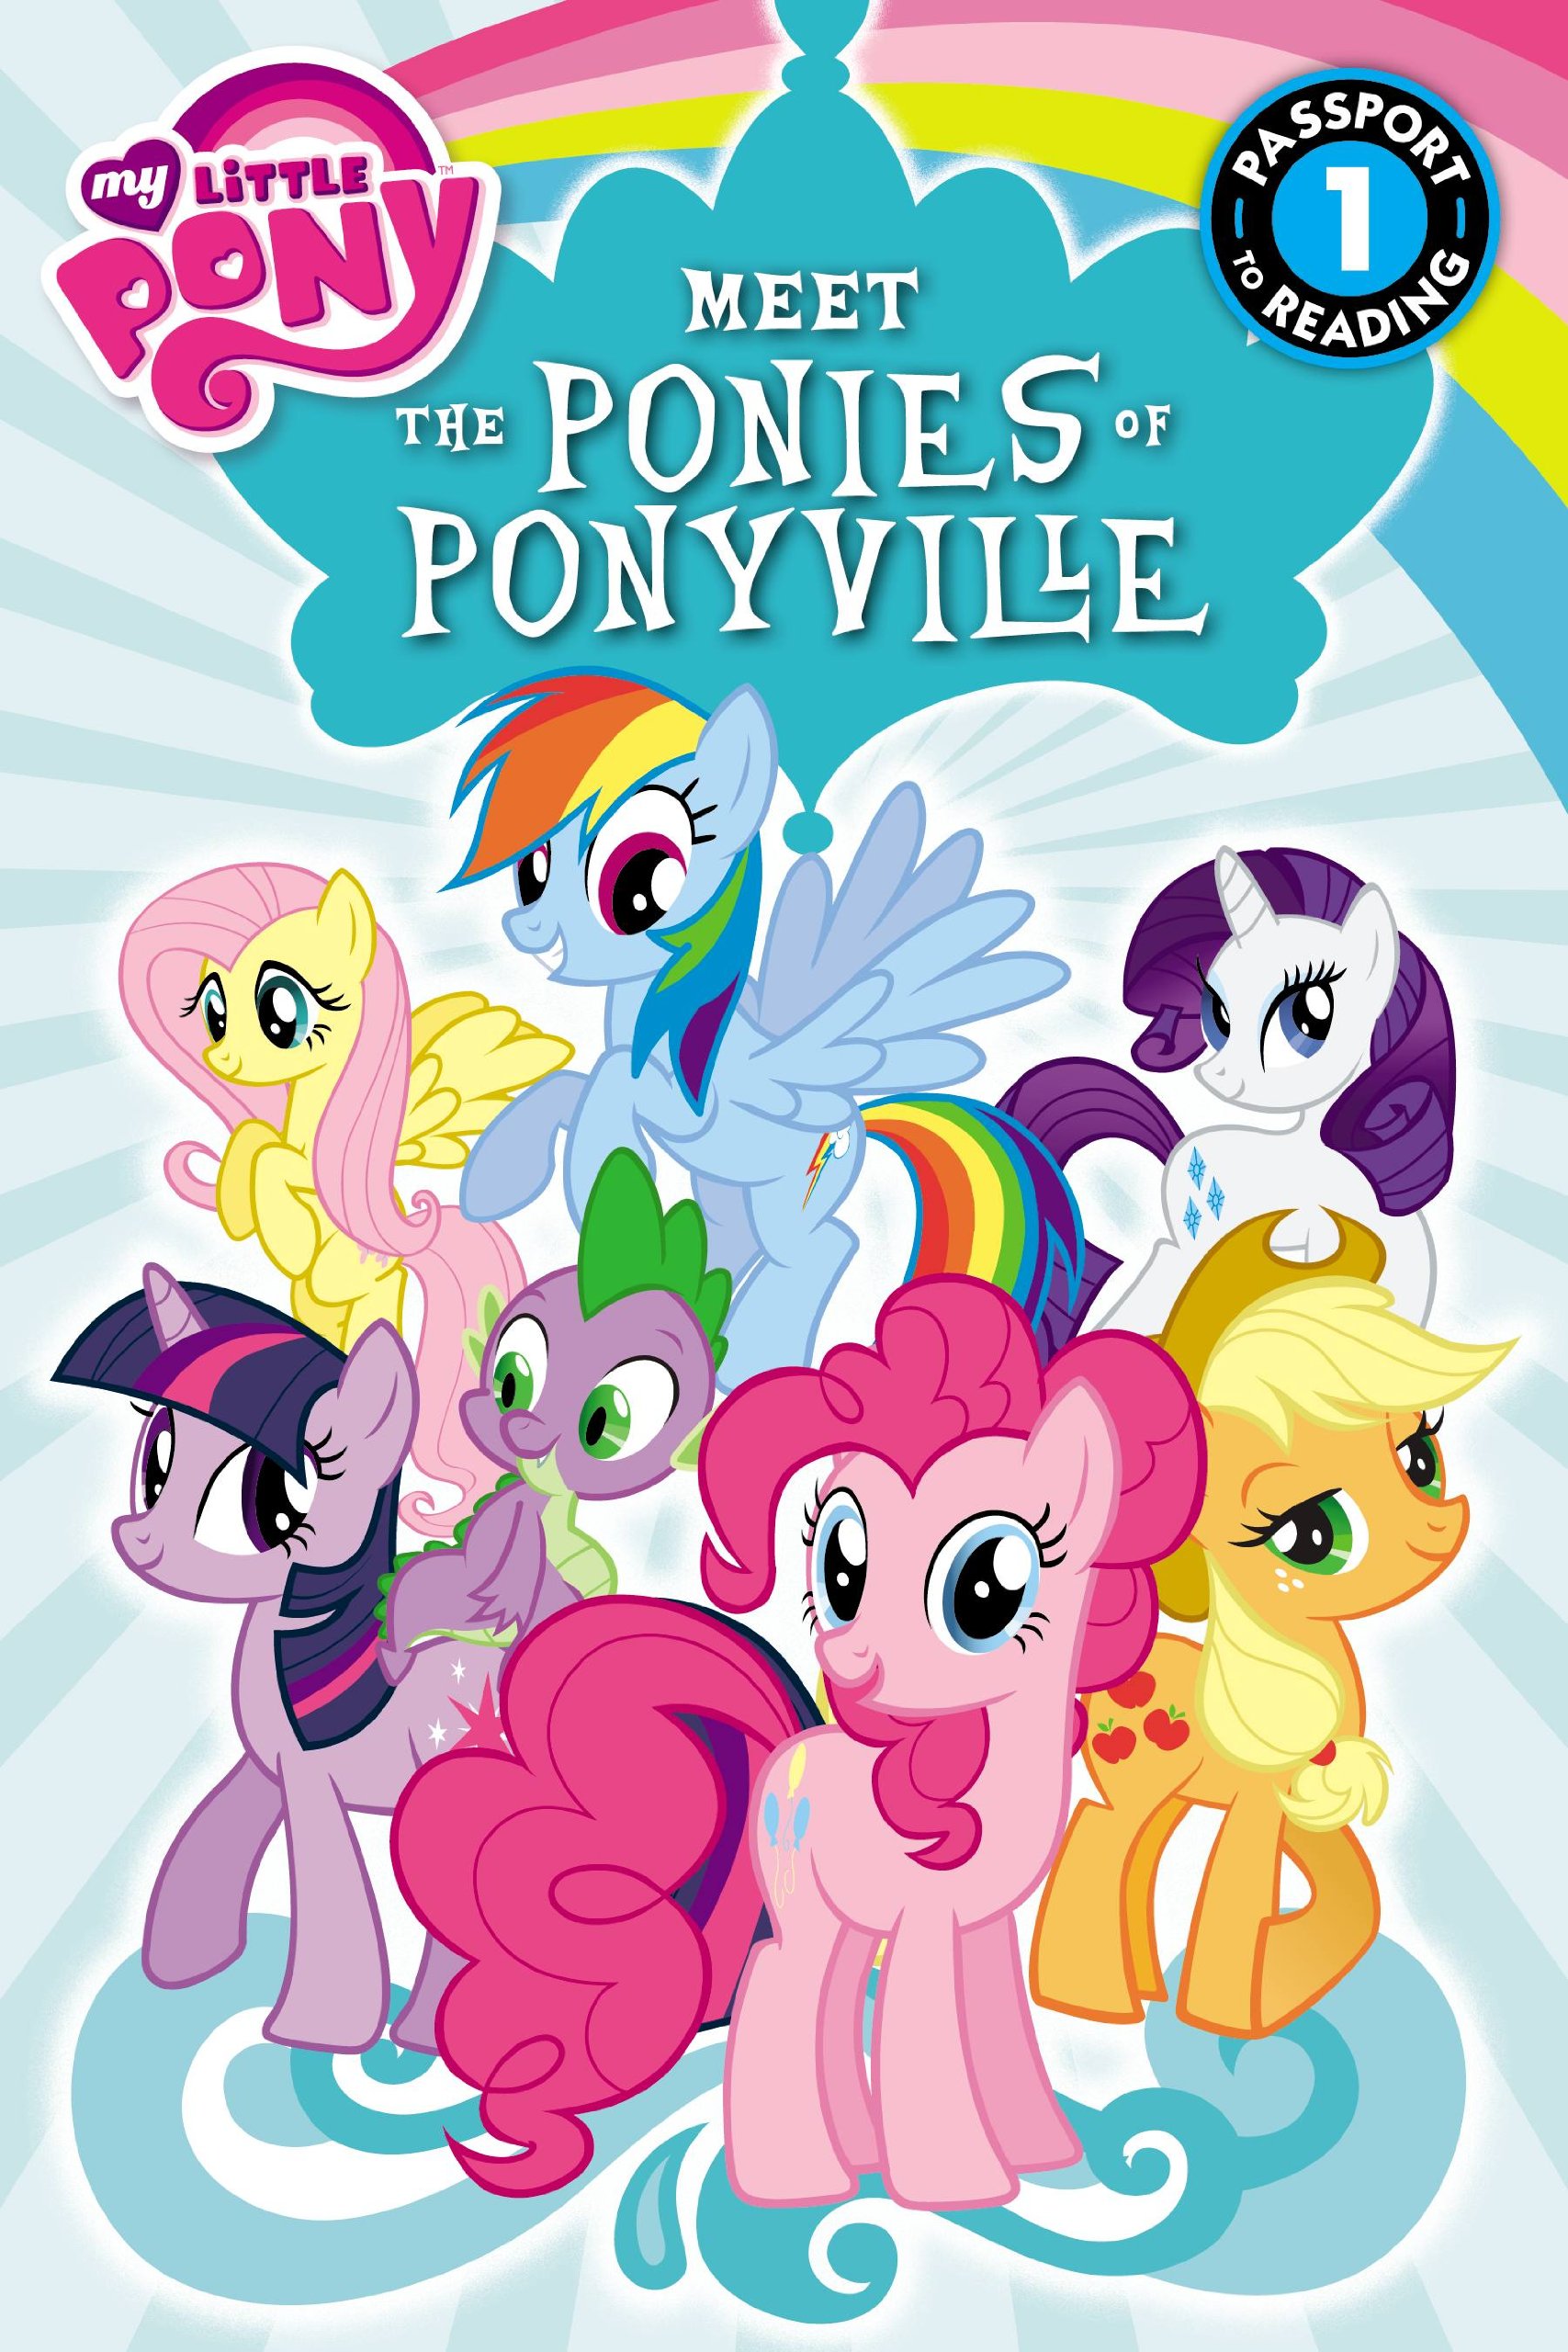 Amazon Little Pony: Meet the Ponies of Ponyville: Level 1 (Passport to Reading Level 1): London, Olivia: 9780316228152: Books